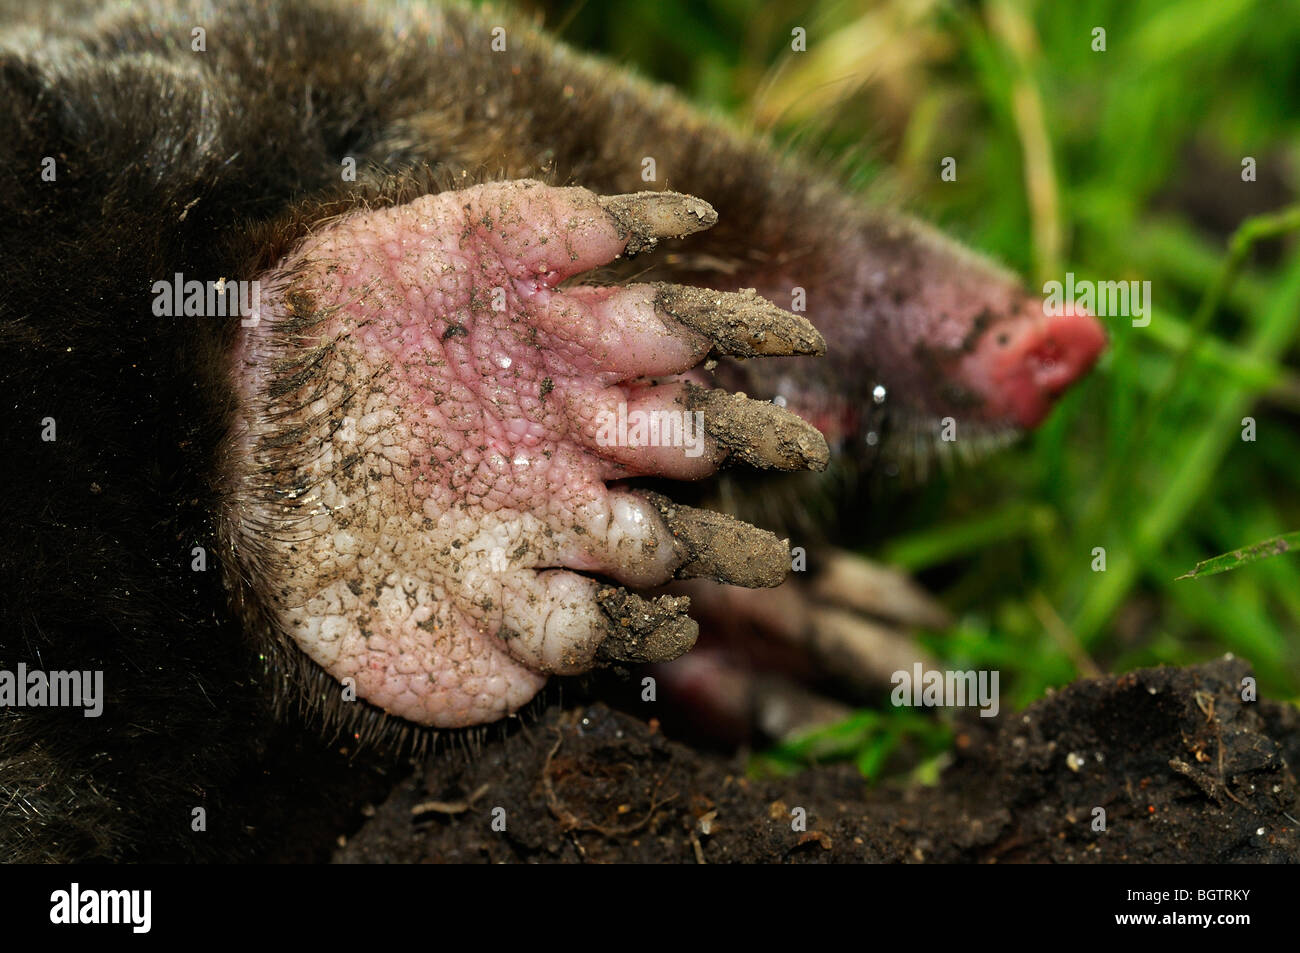 European Mole (Talpa europaea) showing claws on underside of foot, Oxfordshire, UK. Stock Photo